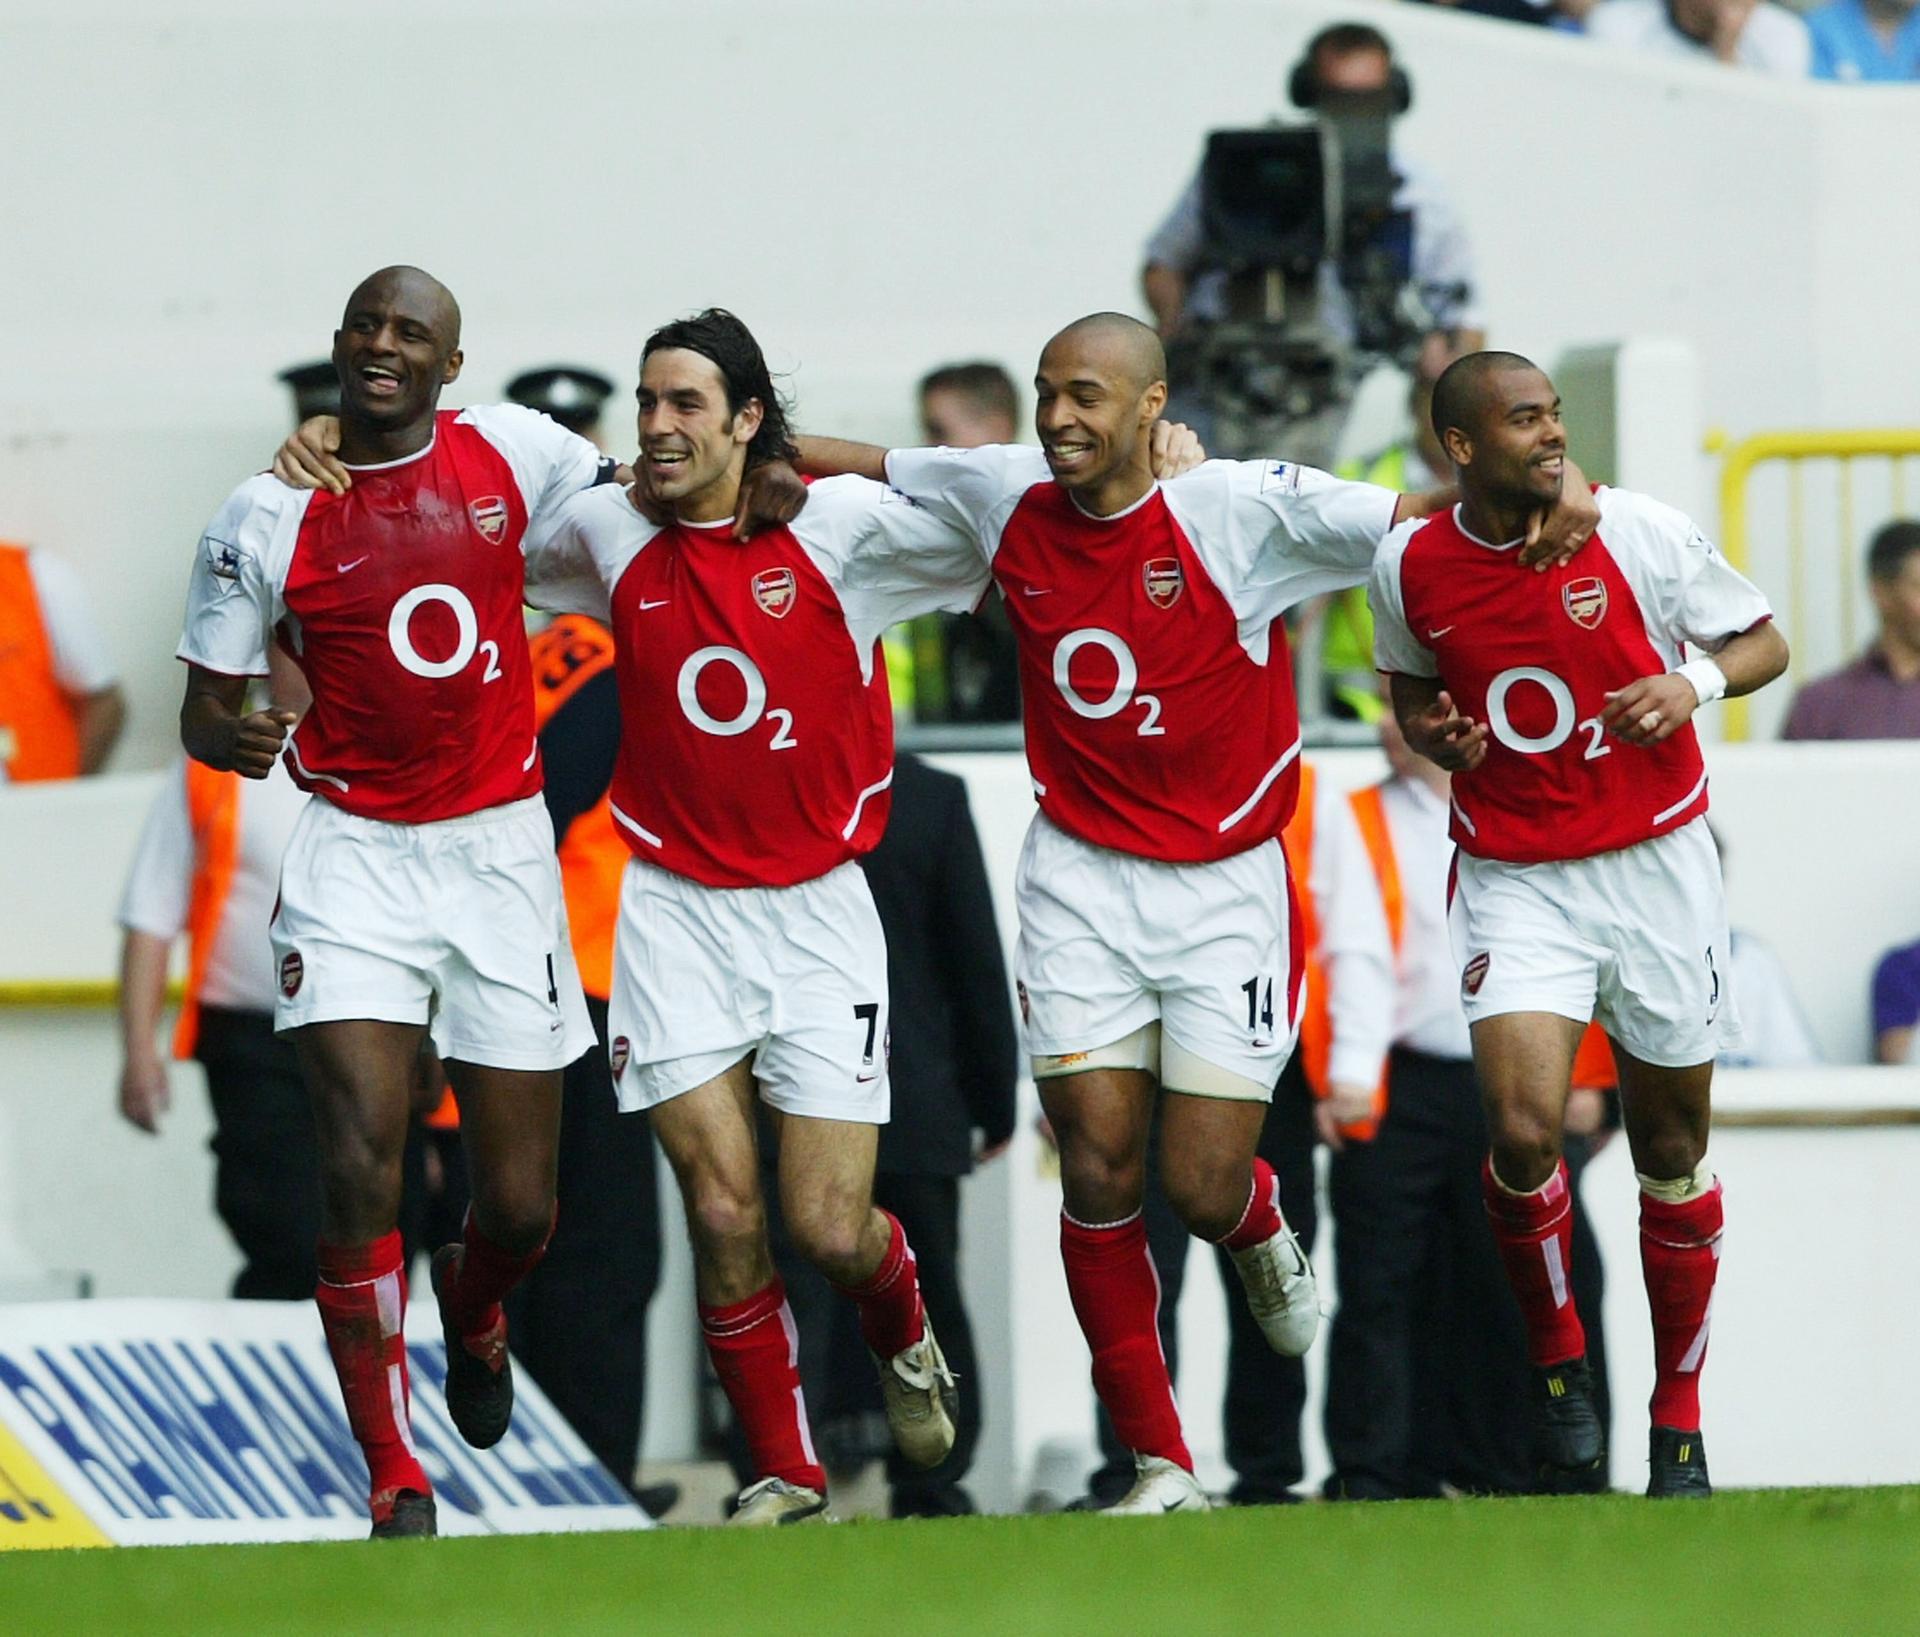 Thierry Henry 12 - Season 03/04 : Robbie Keane celebration a draw